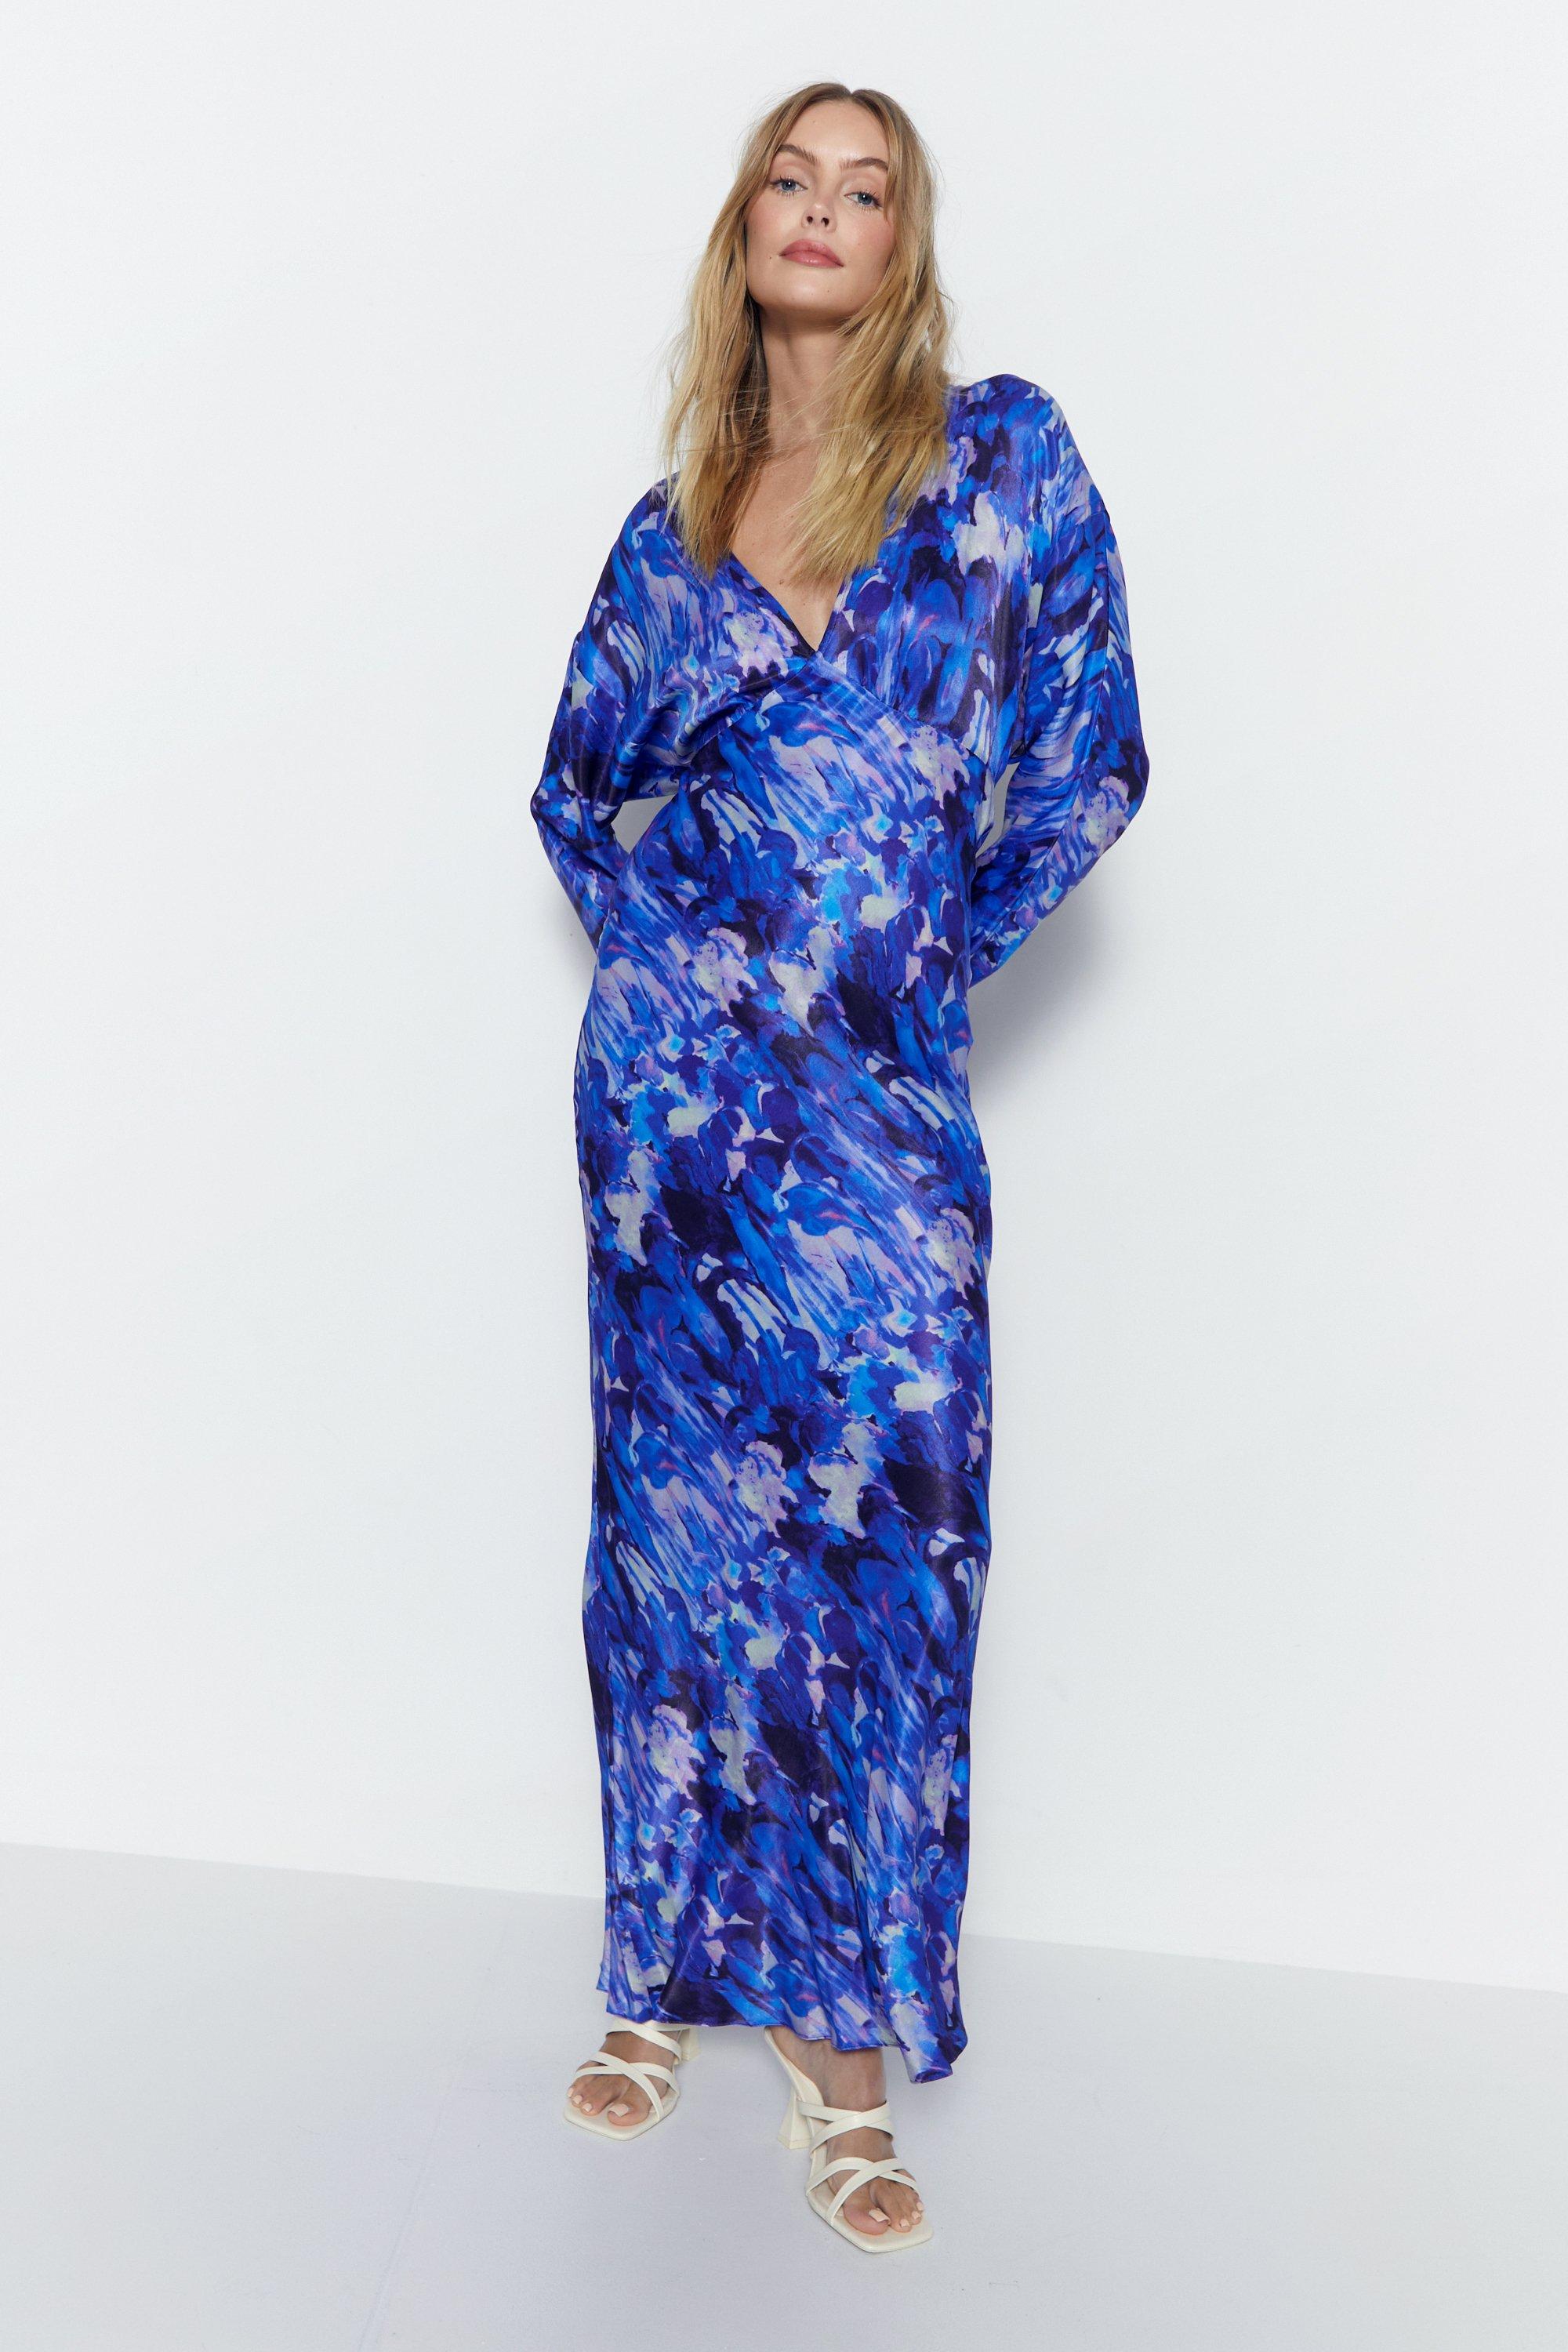 Womens Blurred Abstract Print Satin Batwing Dress - blue